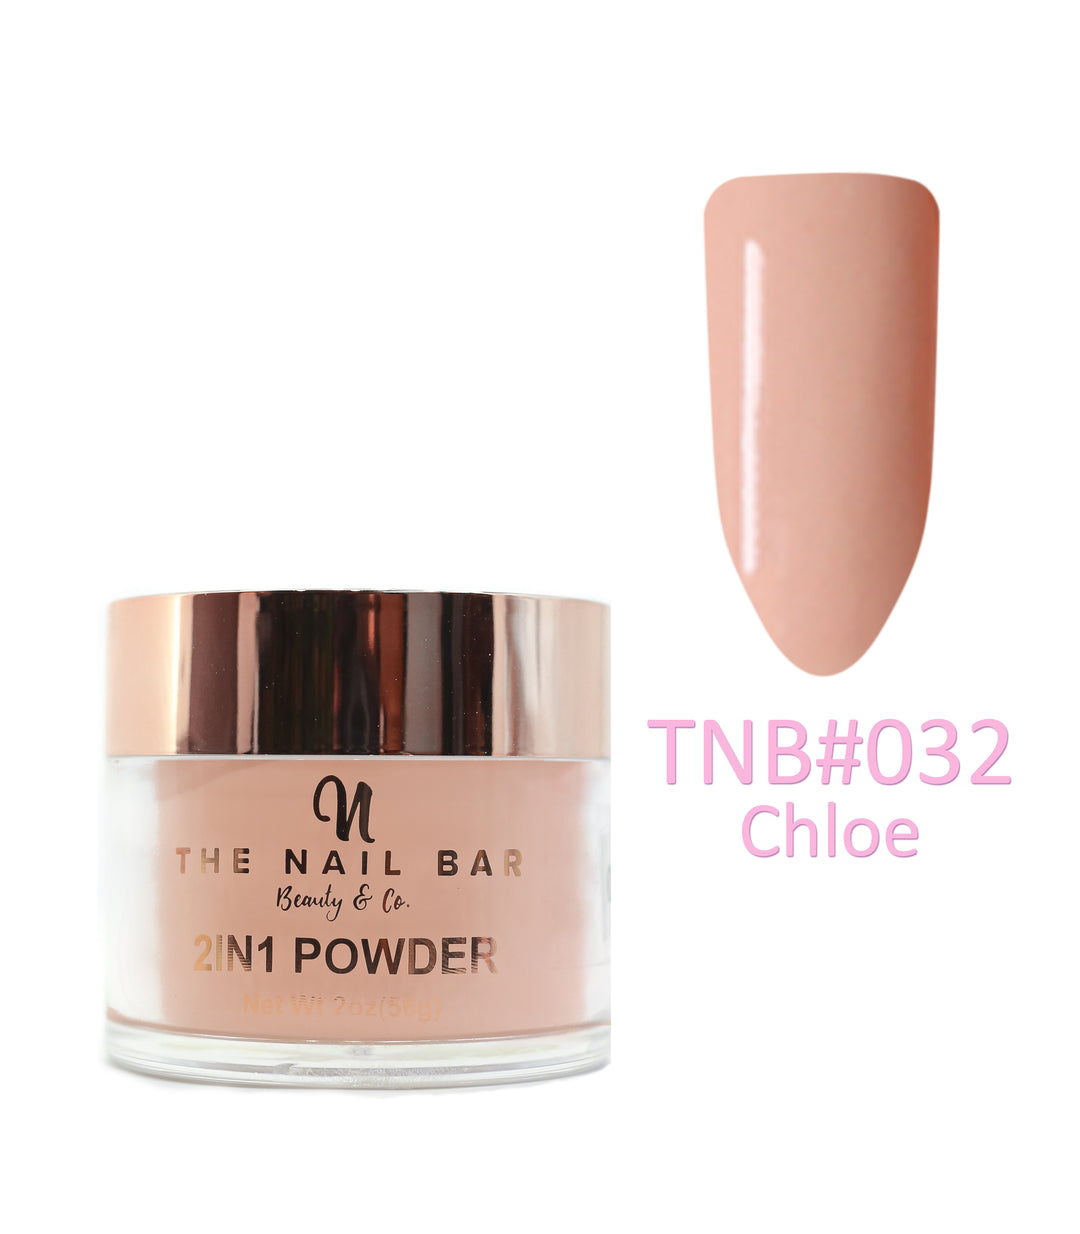 2-In-1 Dipping/Acrylic colour powder (2oz) -Chloe - The Nail Bar Beauty & Co.